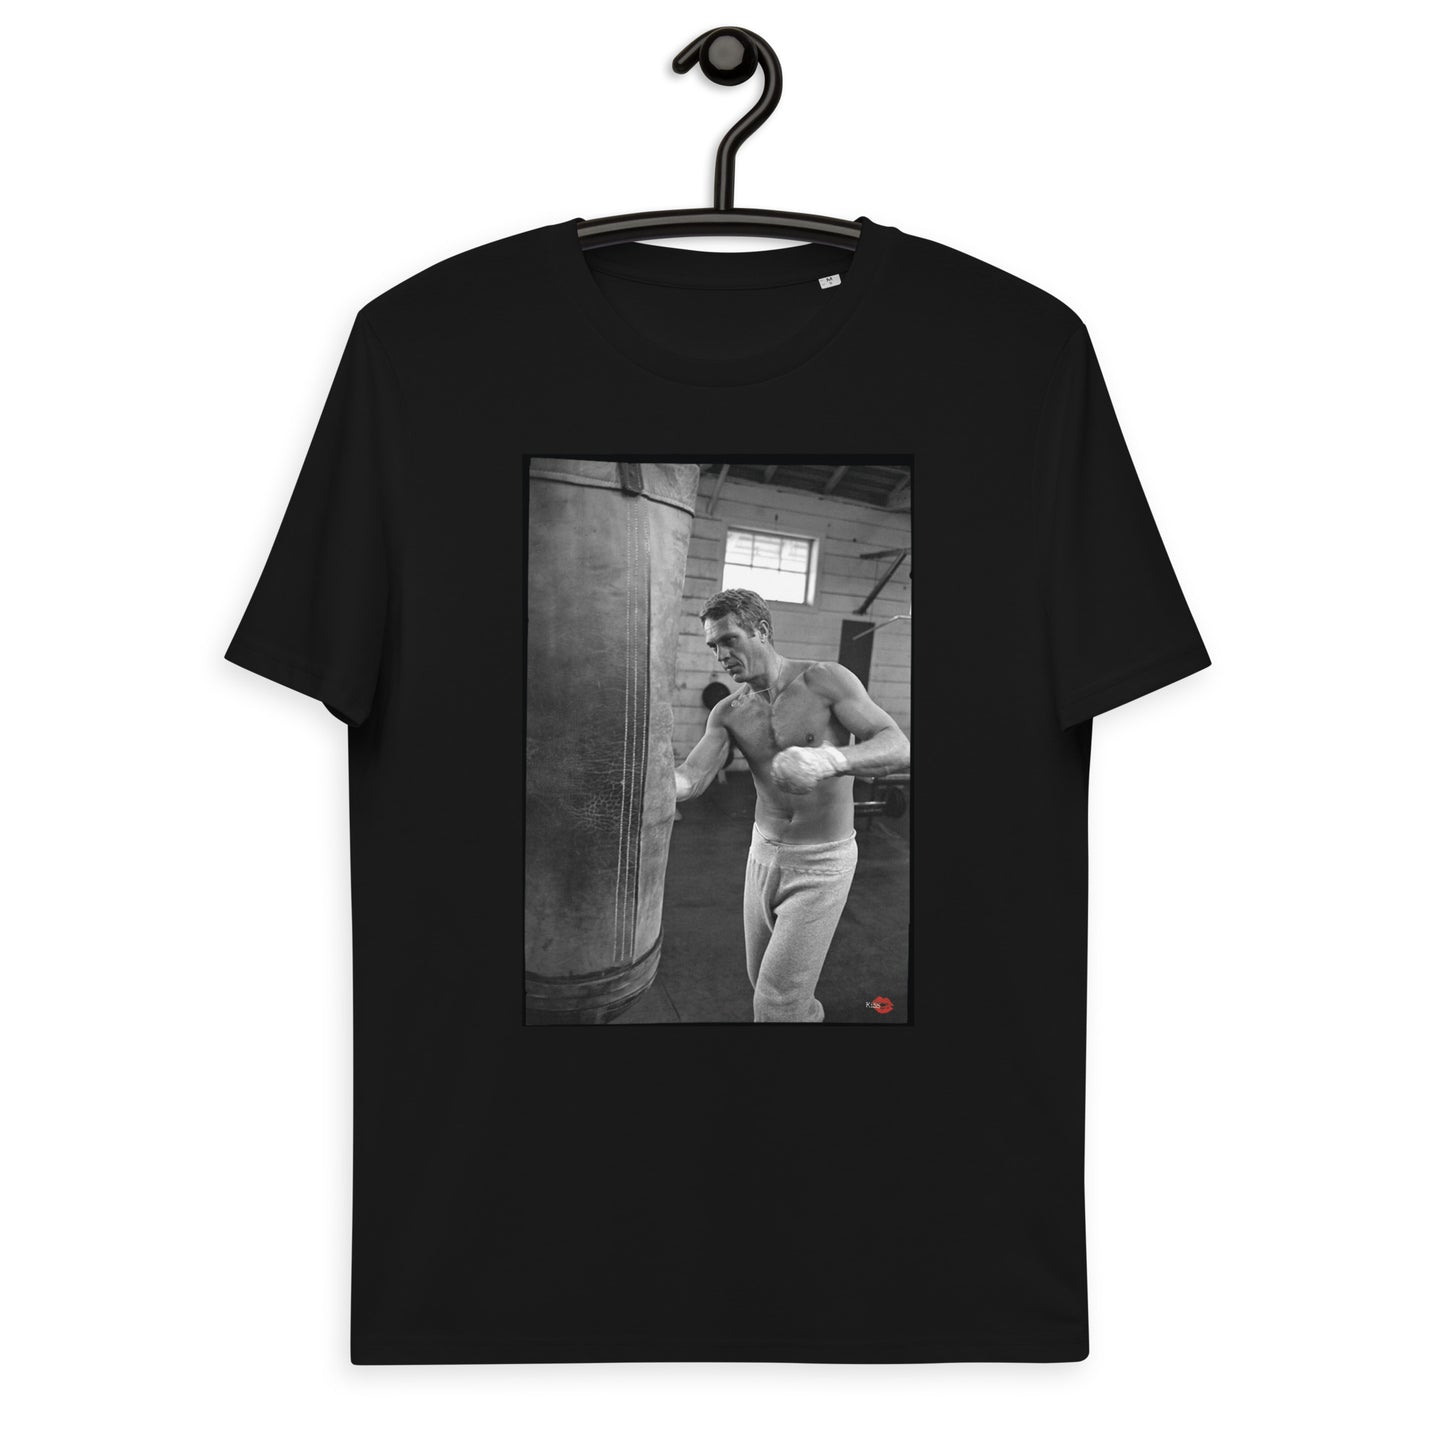 Steve McQueen Boxing KiSS Unisex organic cotton t-shirt- Actor Boxer - Retro Hollywood Image - Great Escape